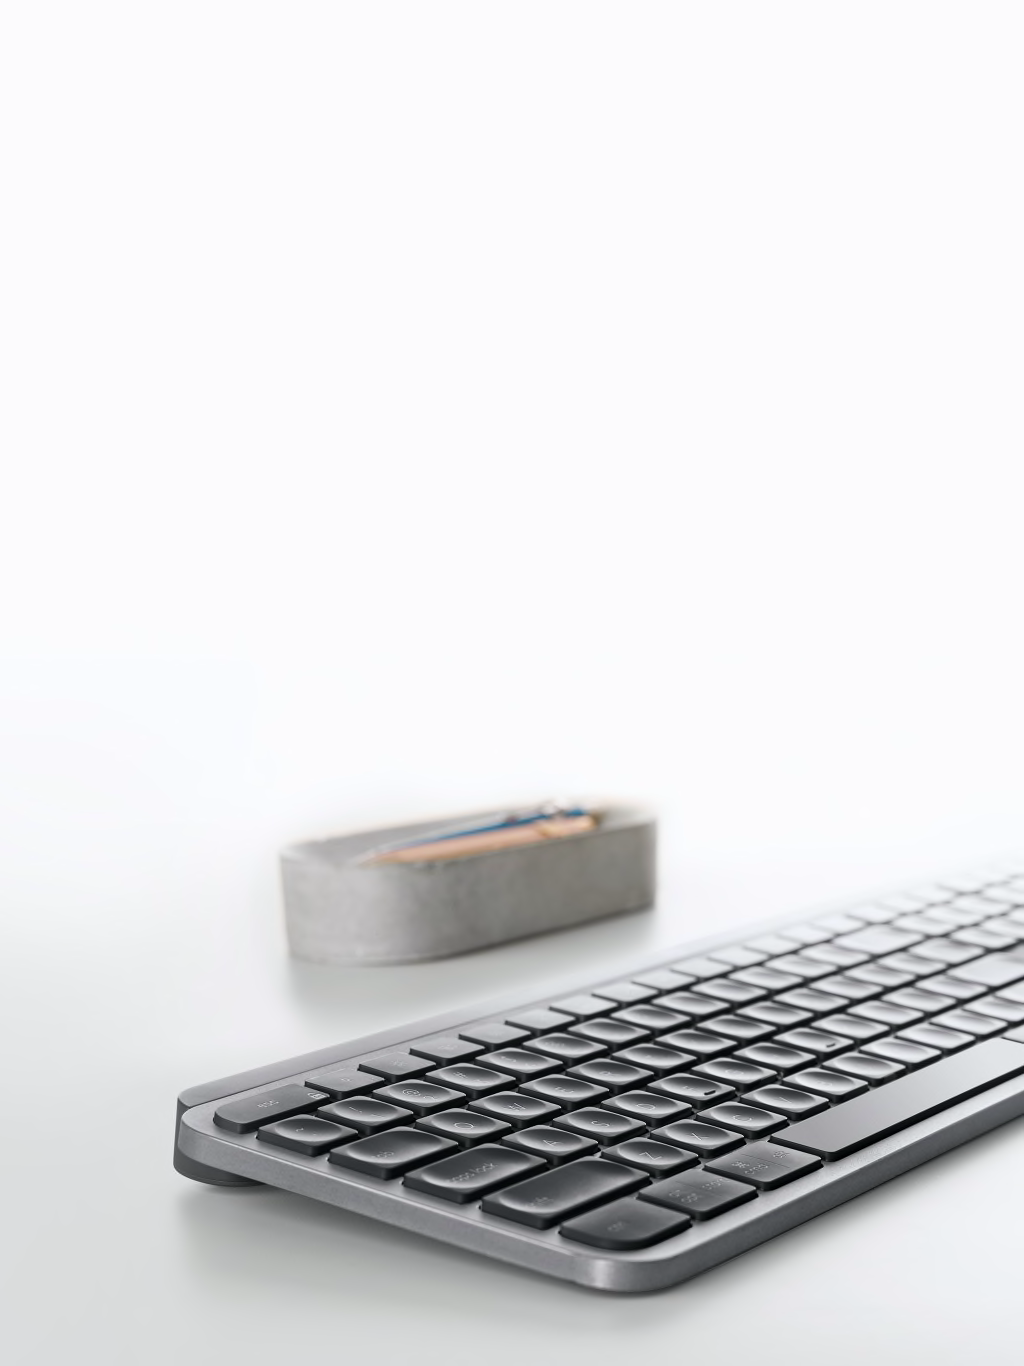 mx-keys-business-keyboard-hero-tablet